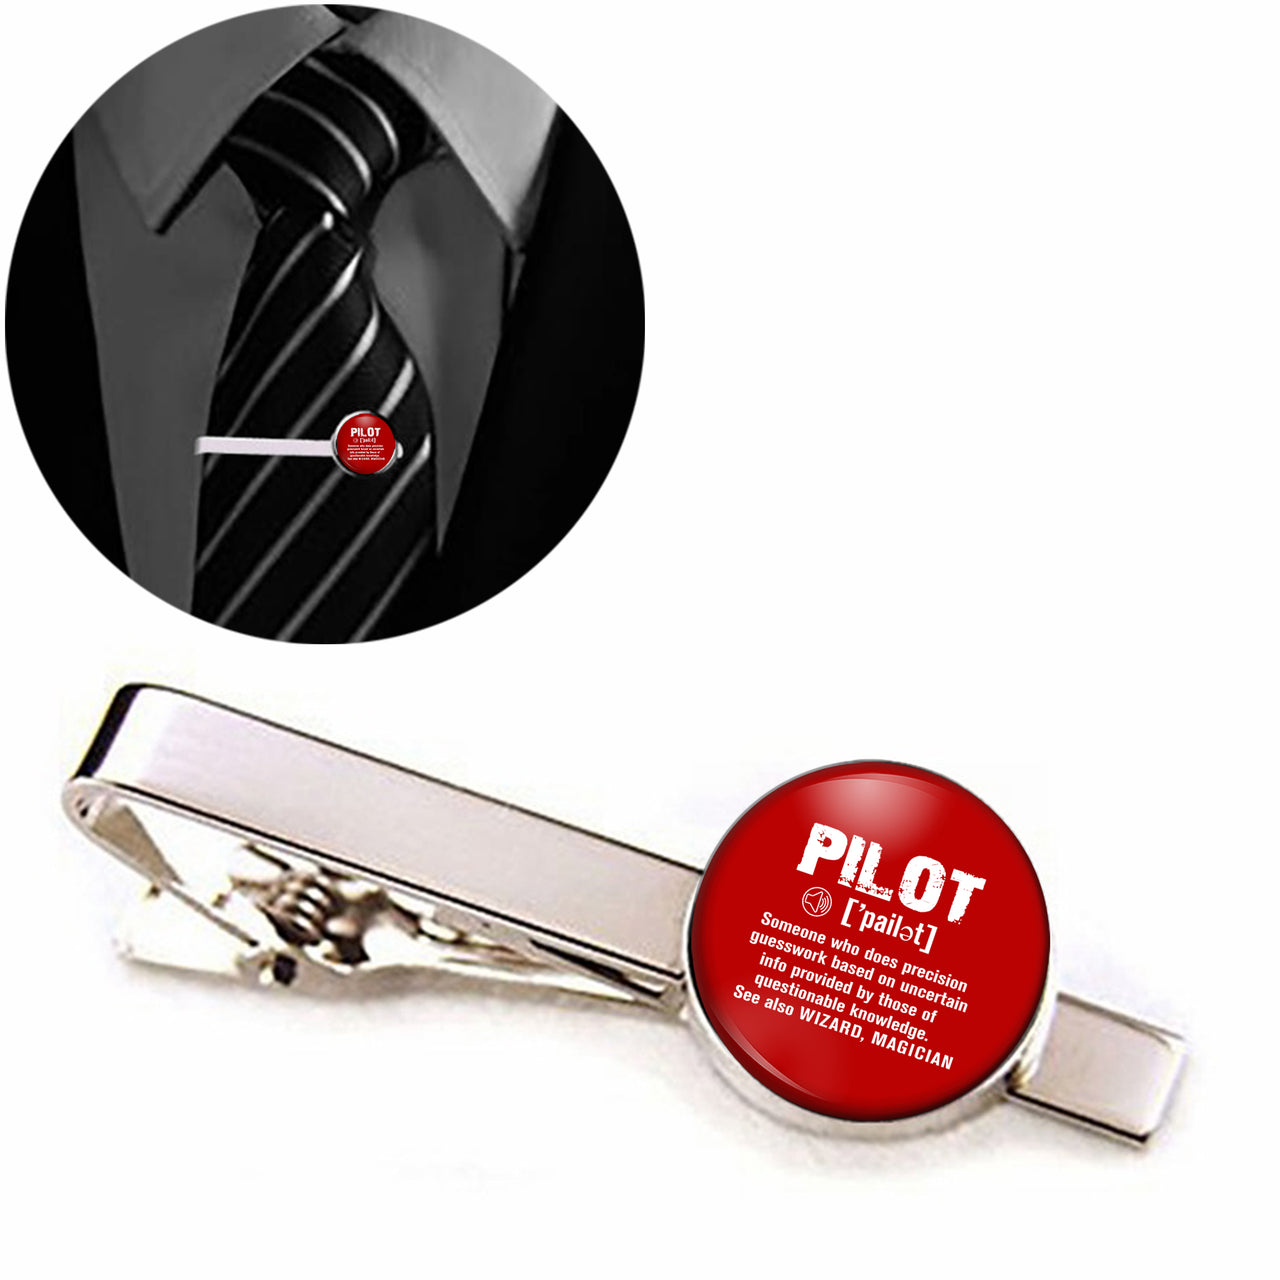 Pilot [Noun] Designed Tie Clips